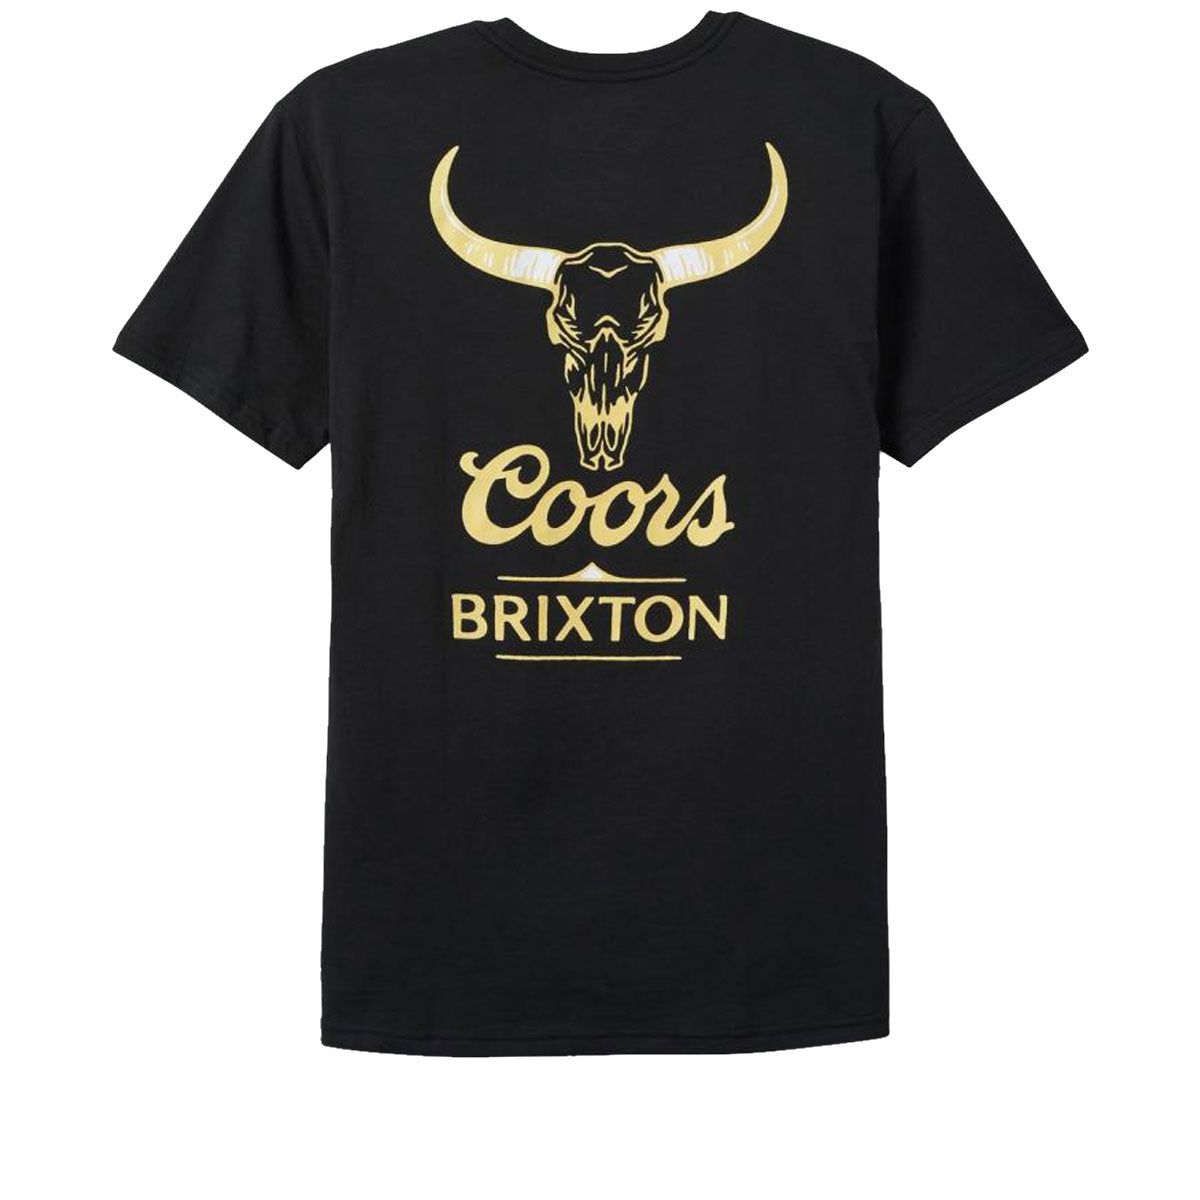 Brixton x Coors Bull T-Shirt - Black image 1